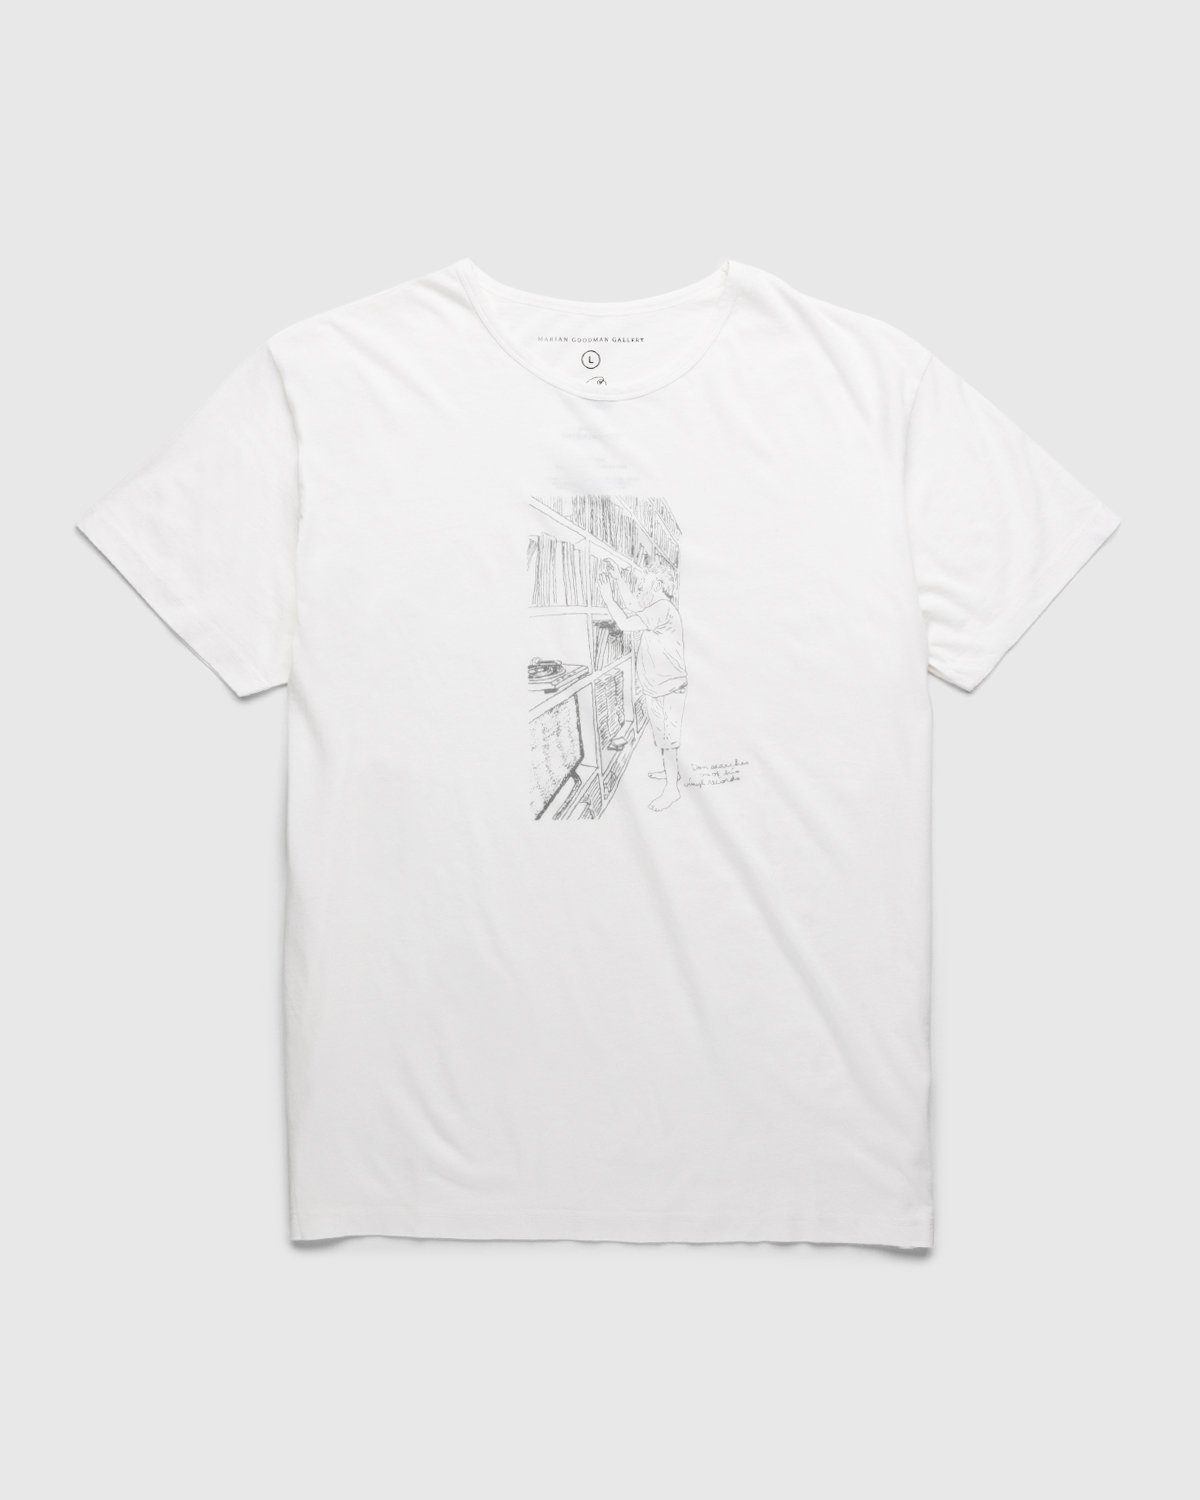 Mieko Meguro x Dan Graham - T-Shirt - Clothing - White - Image 1